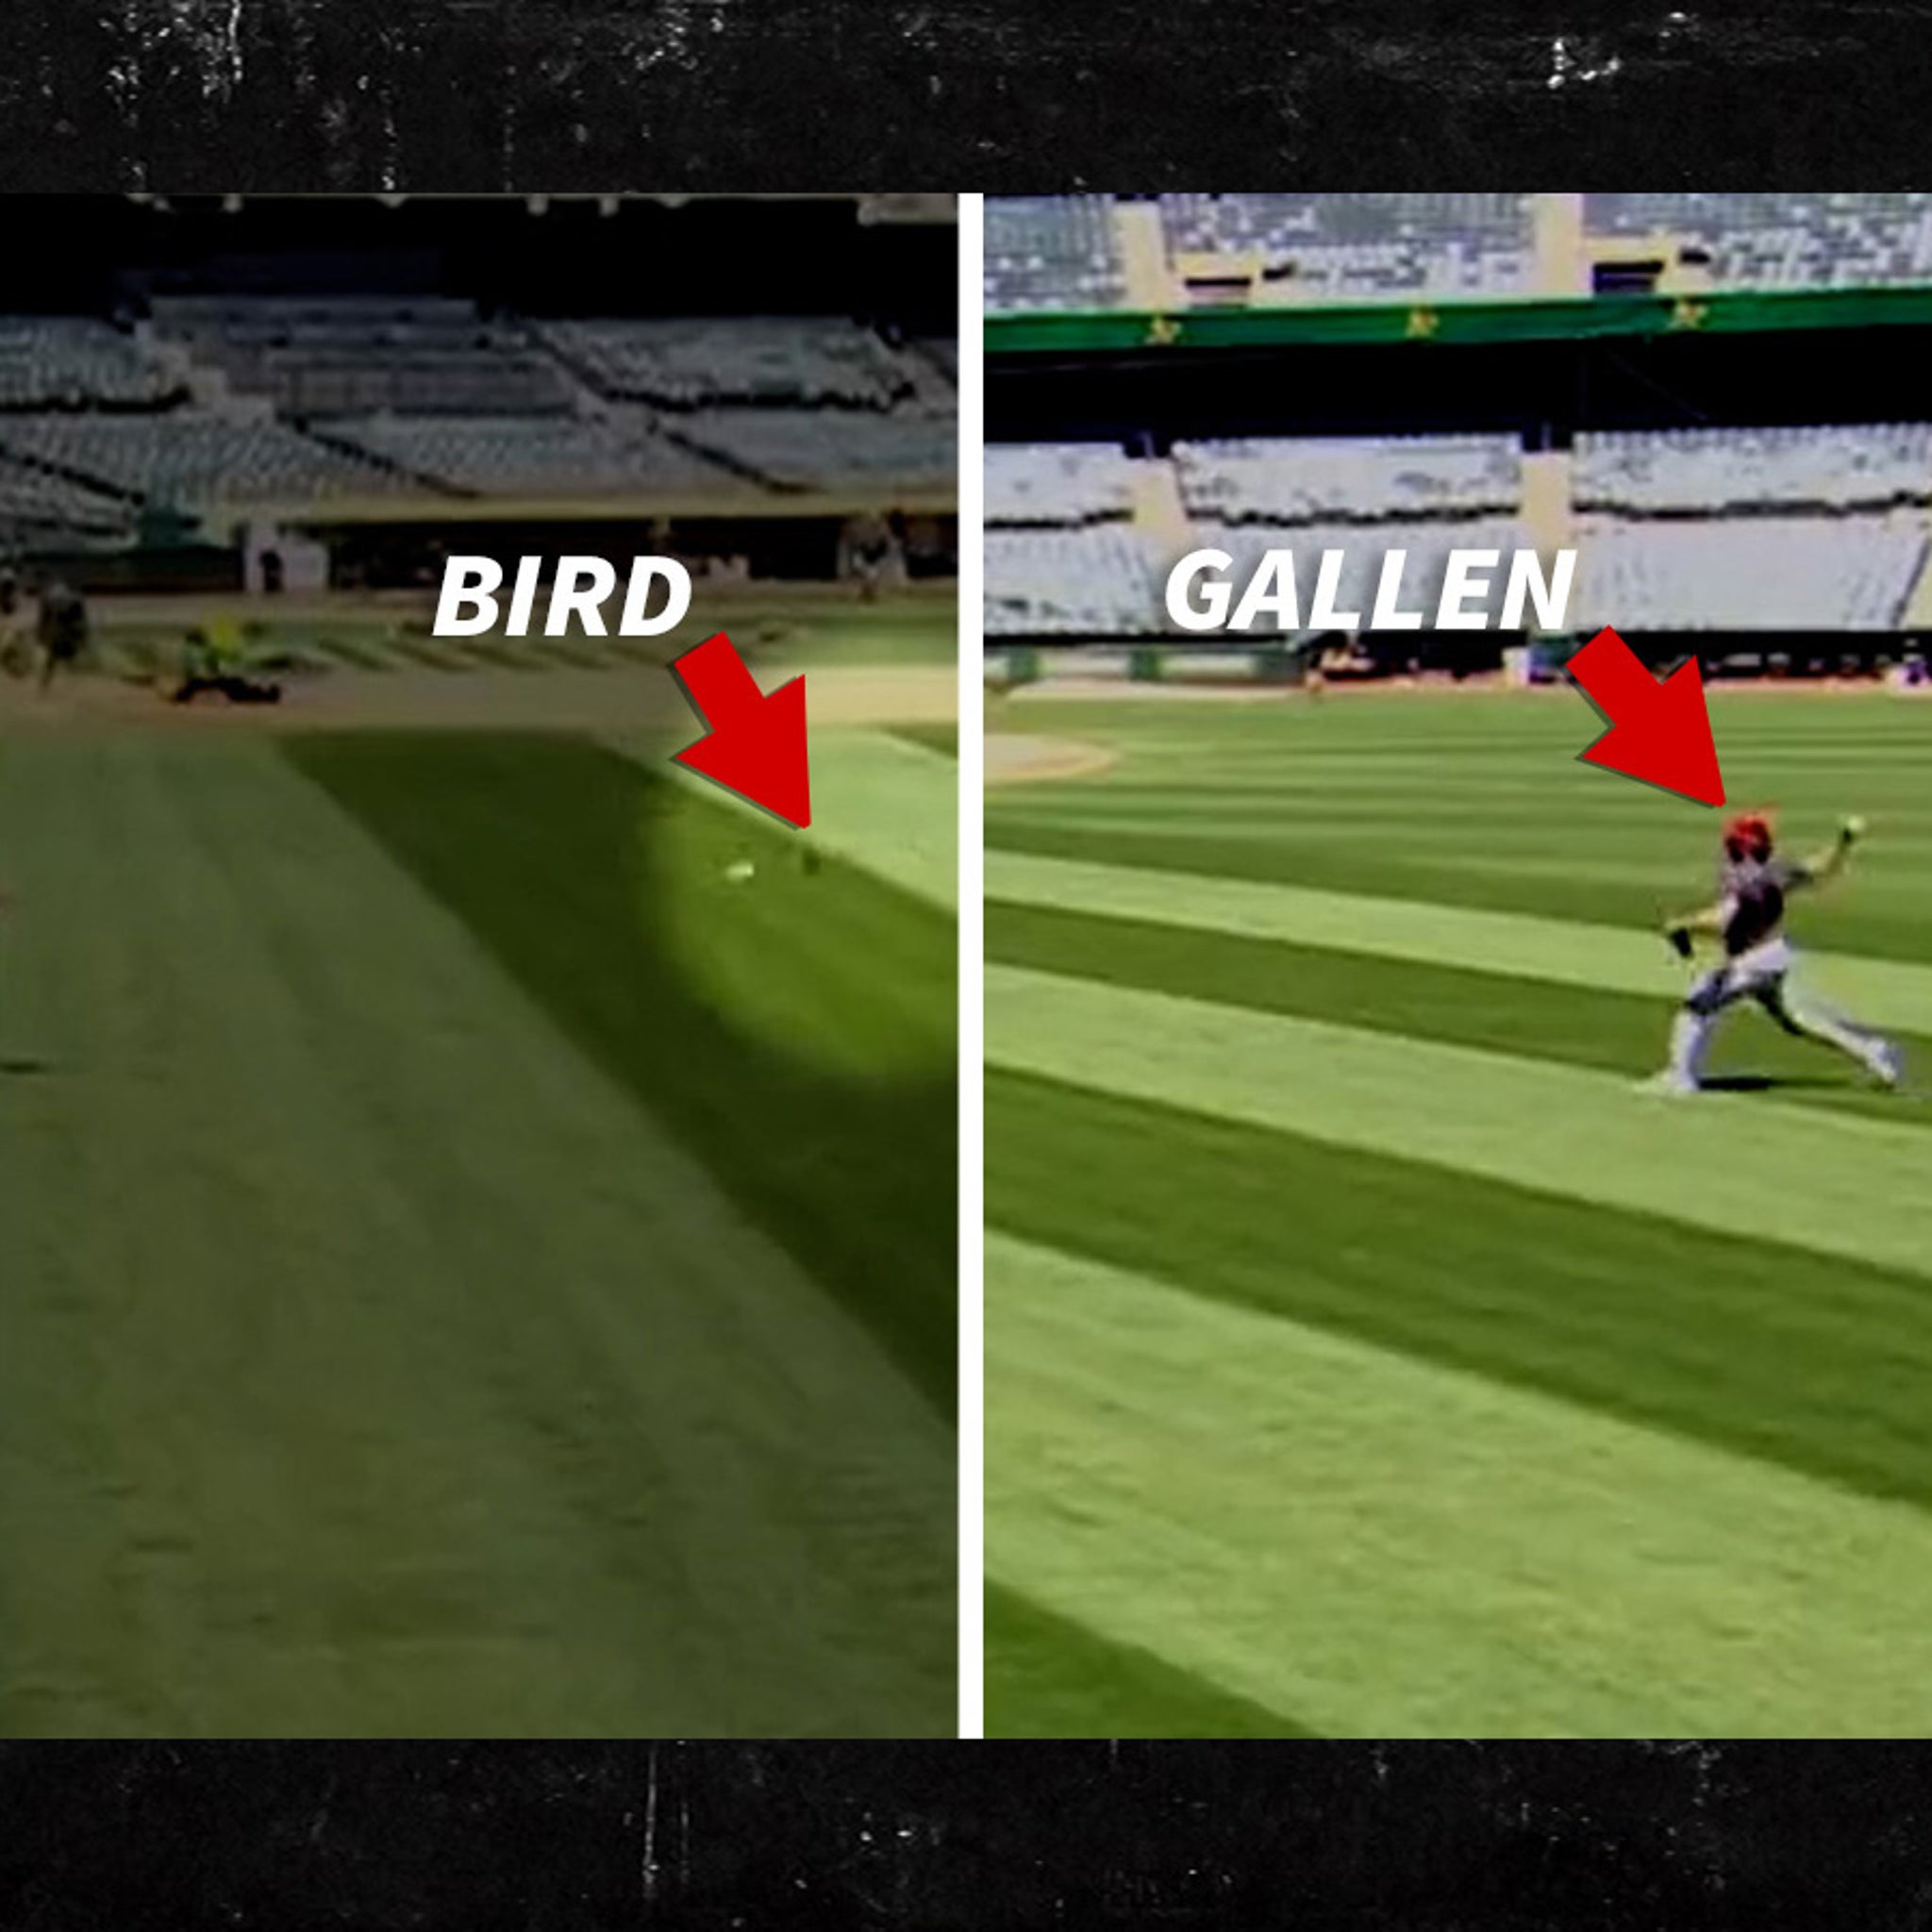 Pitcher Zac Gallen channels Randy Johnson, hits bird with pitch